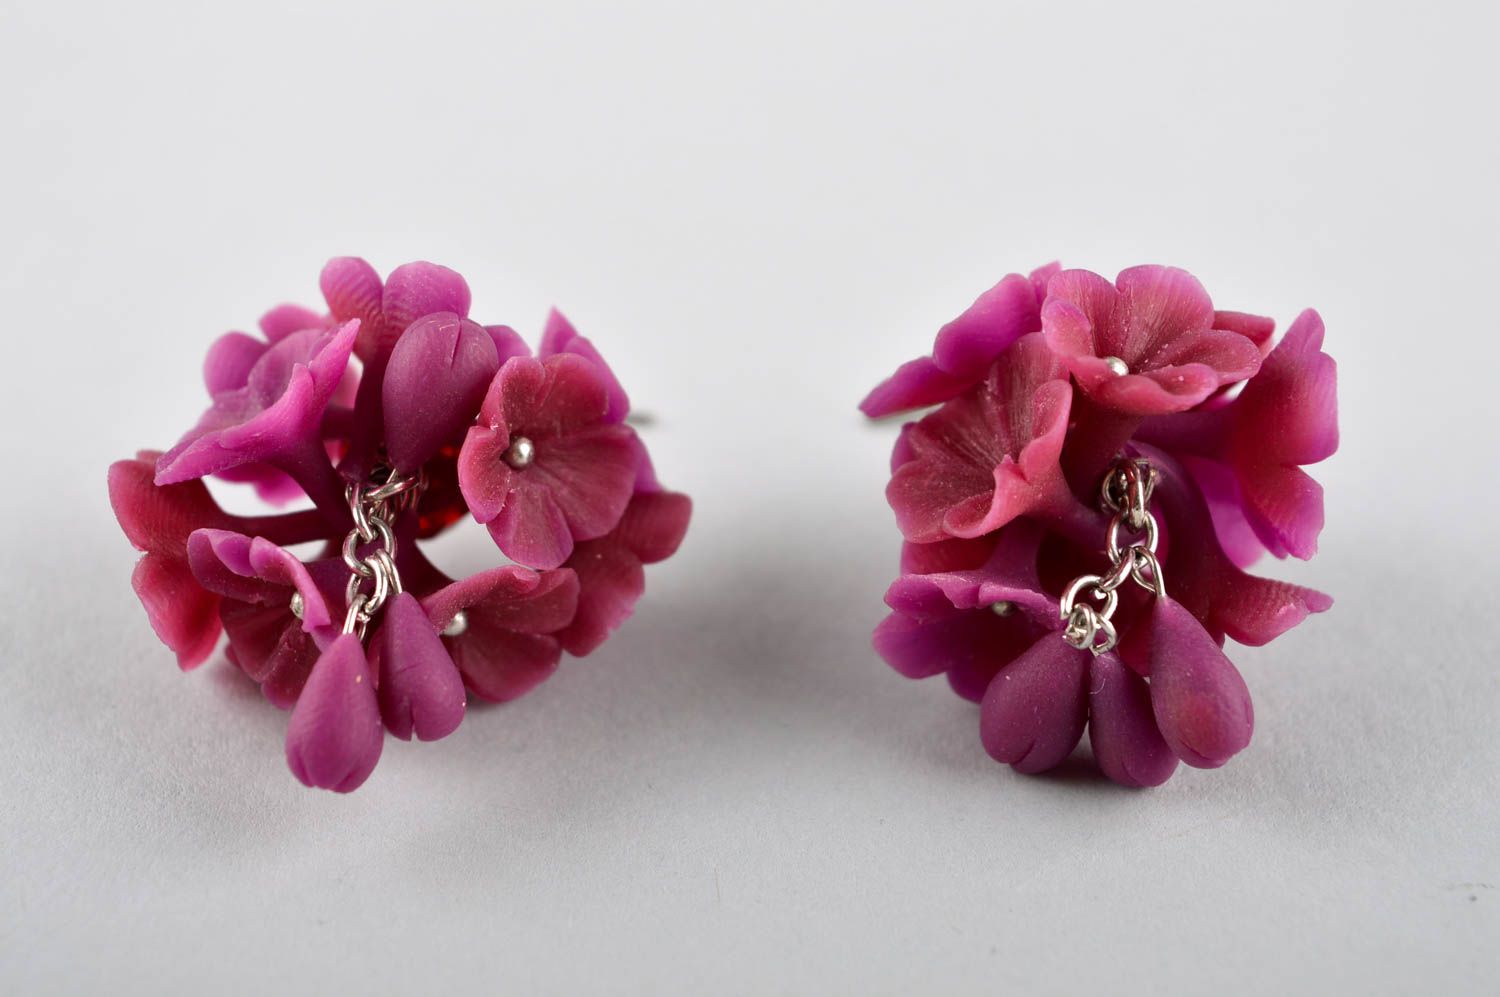 Flower earrings handmade plastic earrings polymer clay accessories for women photo 4